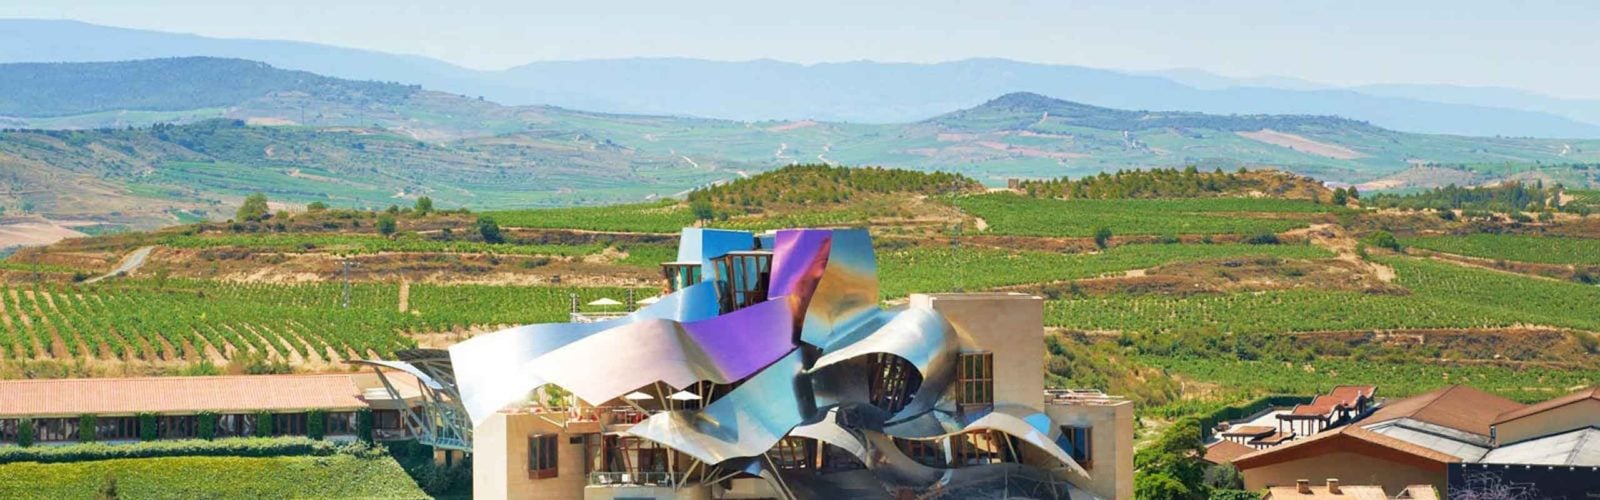 Exterior view, Hotel Marques de Riscal, La Rioja, Spain